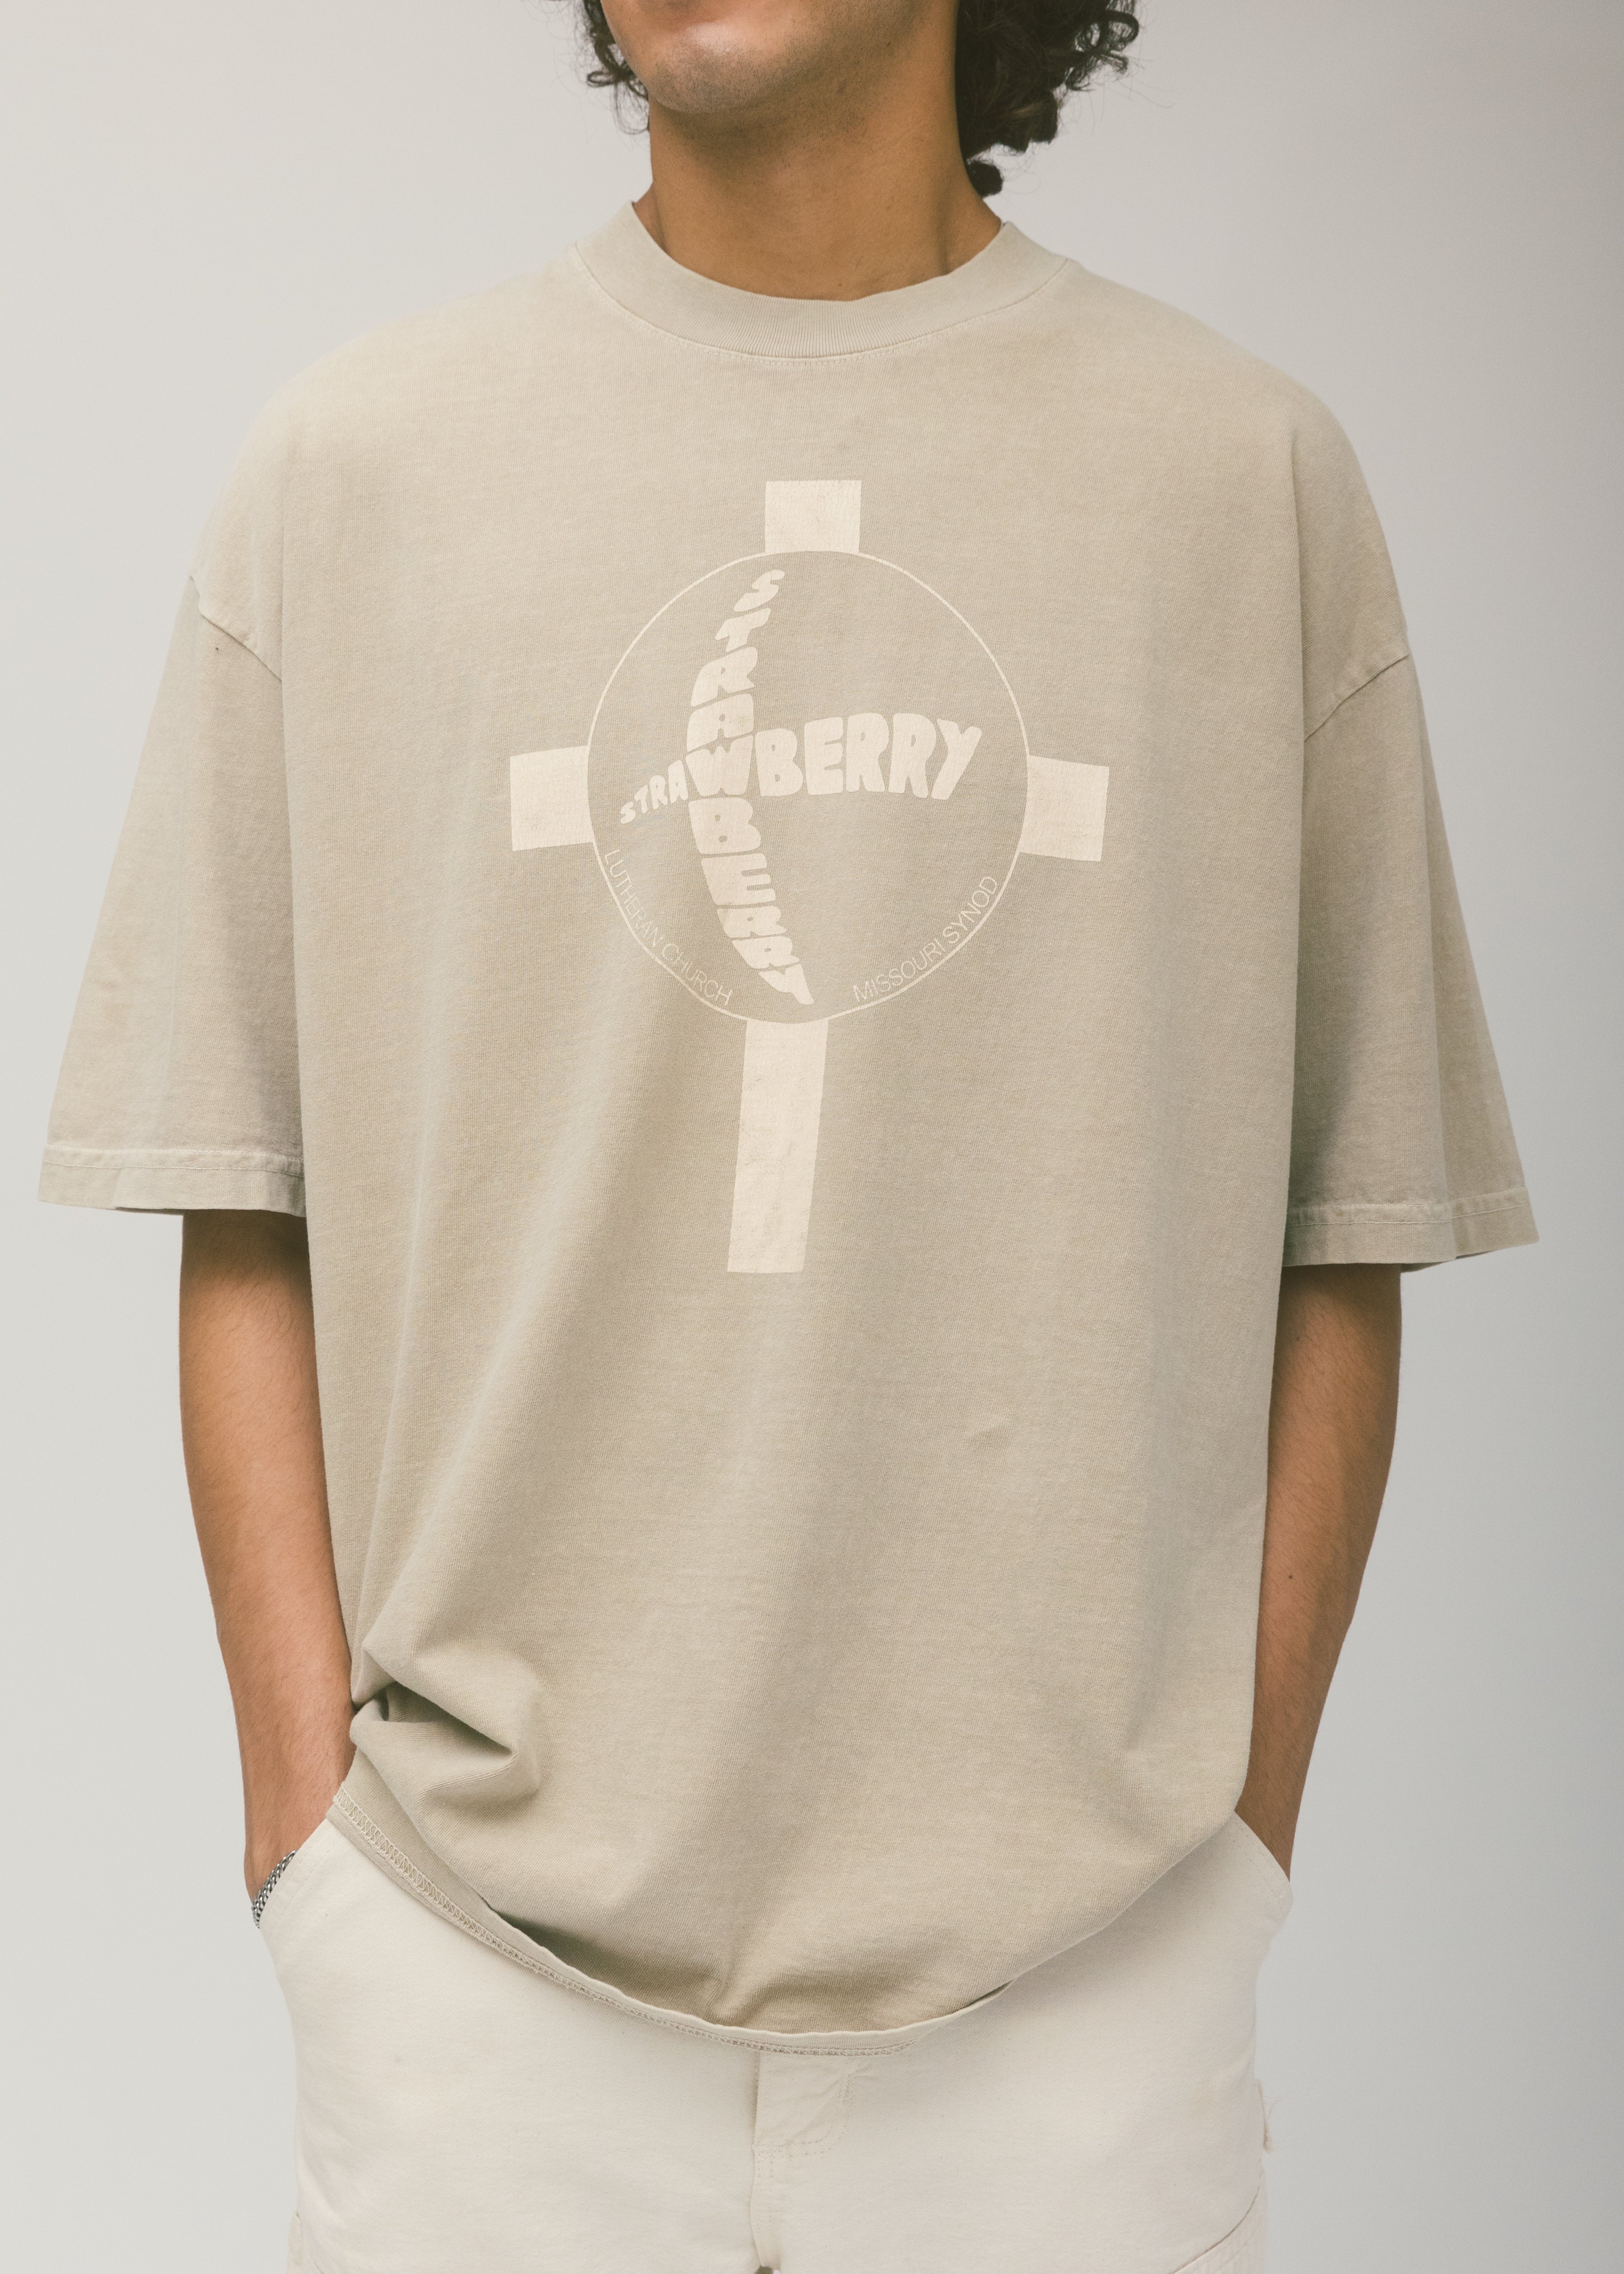 Cross T-Shirt - Taupe